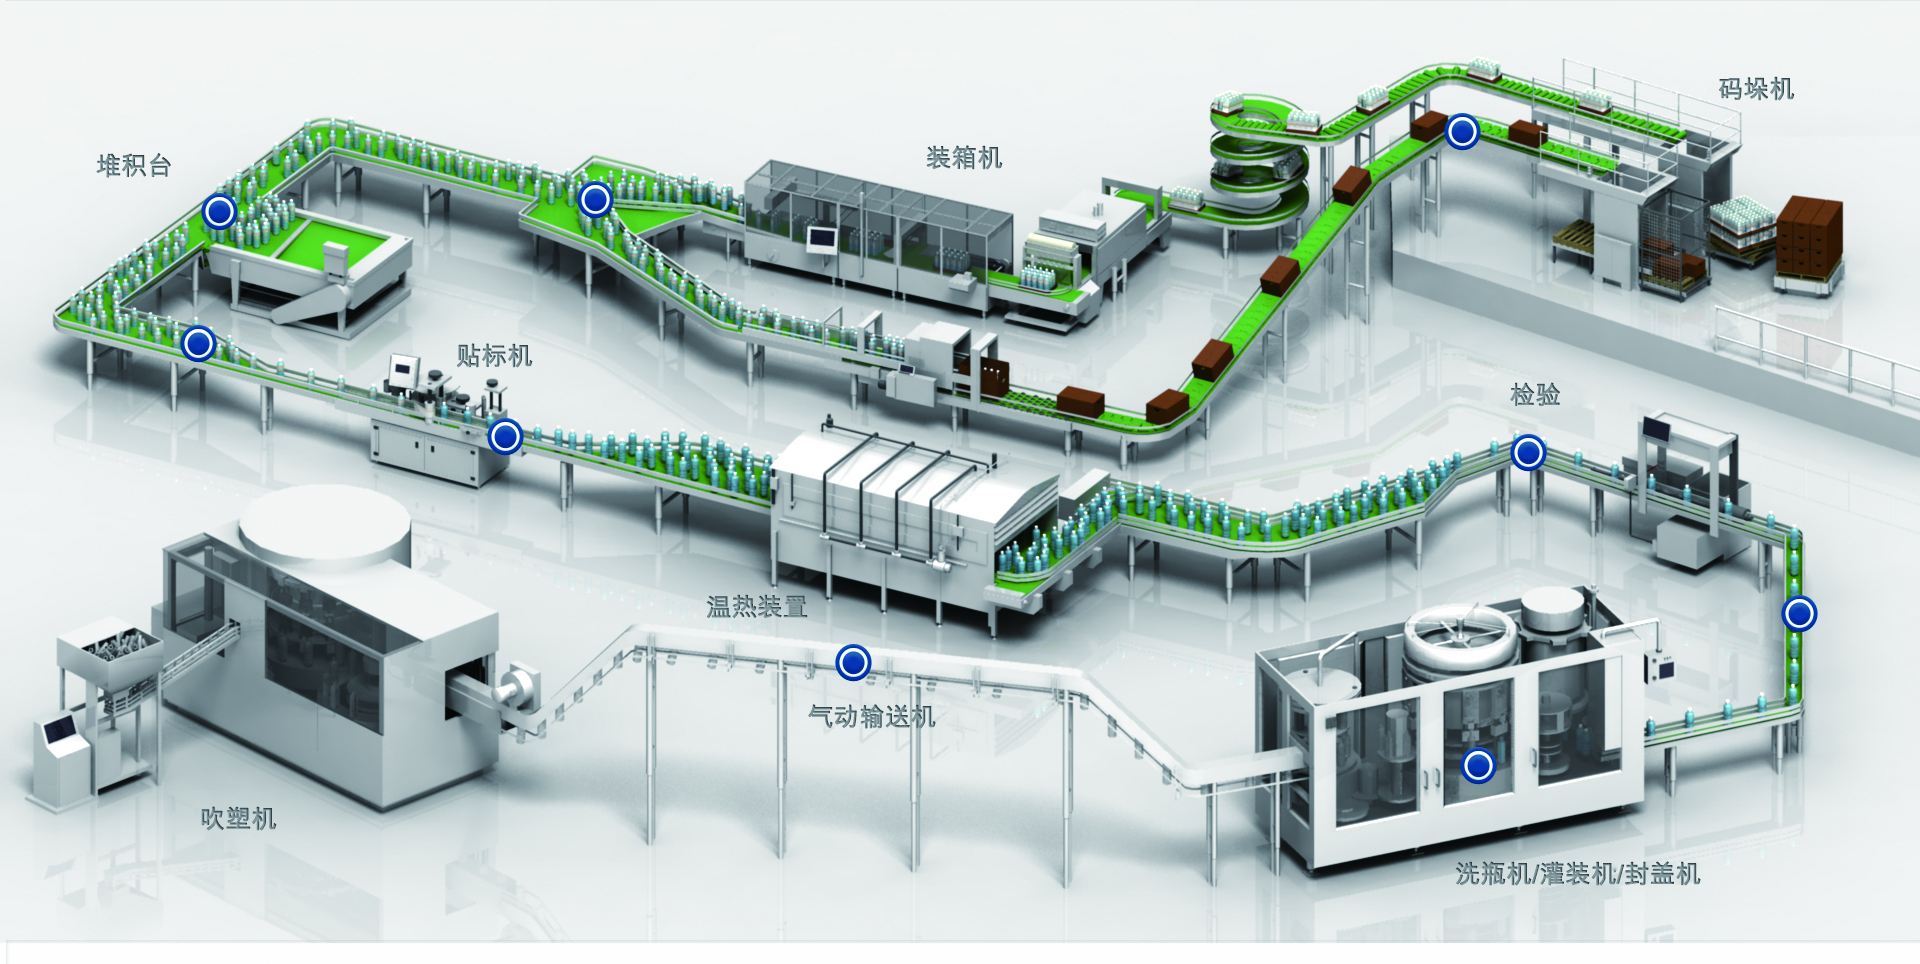 Design and application scenarios of plastic mesh belt conveyor